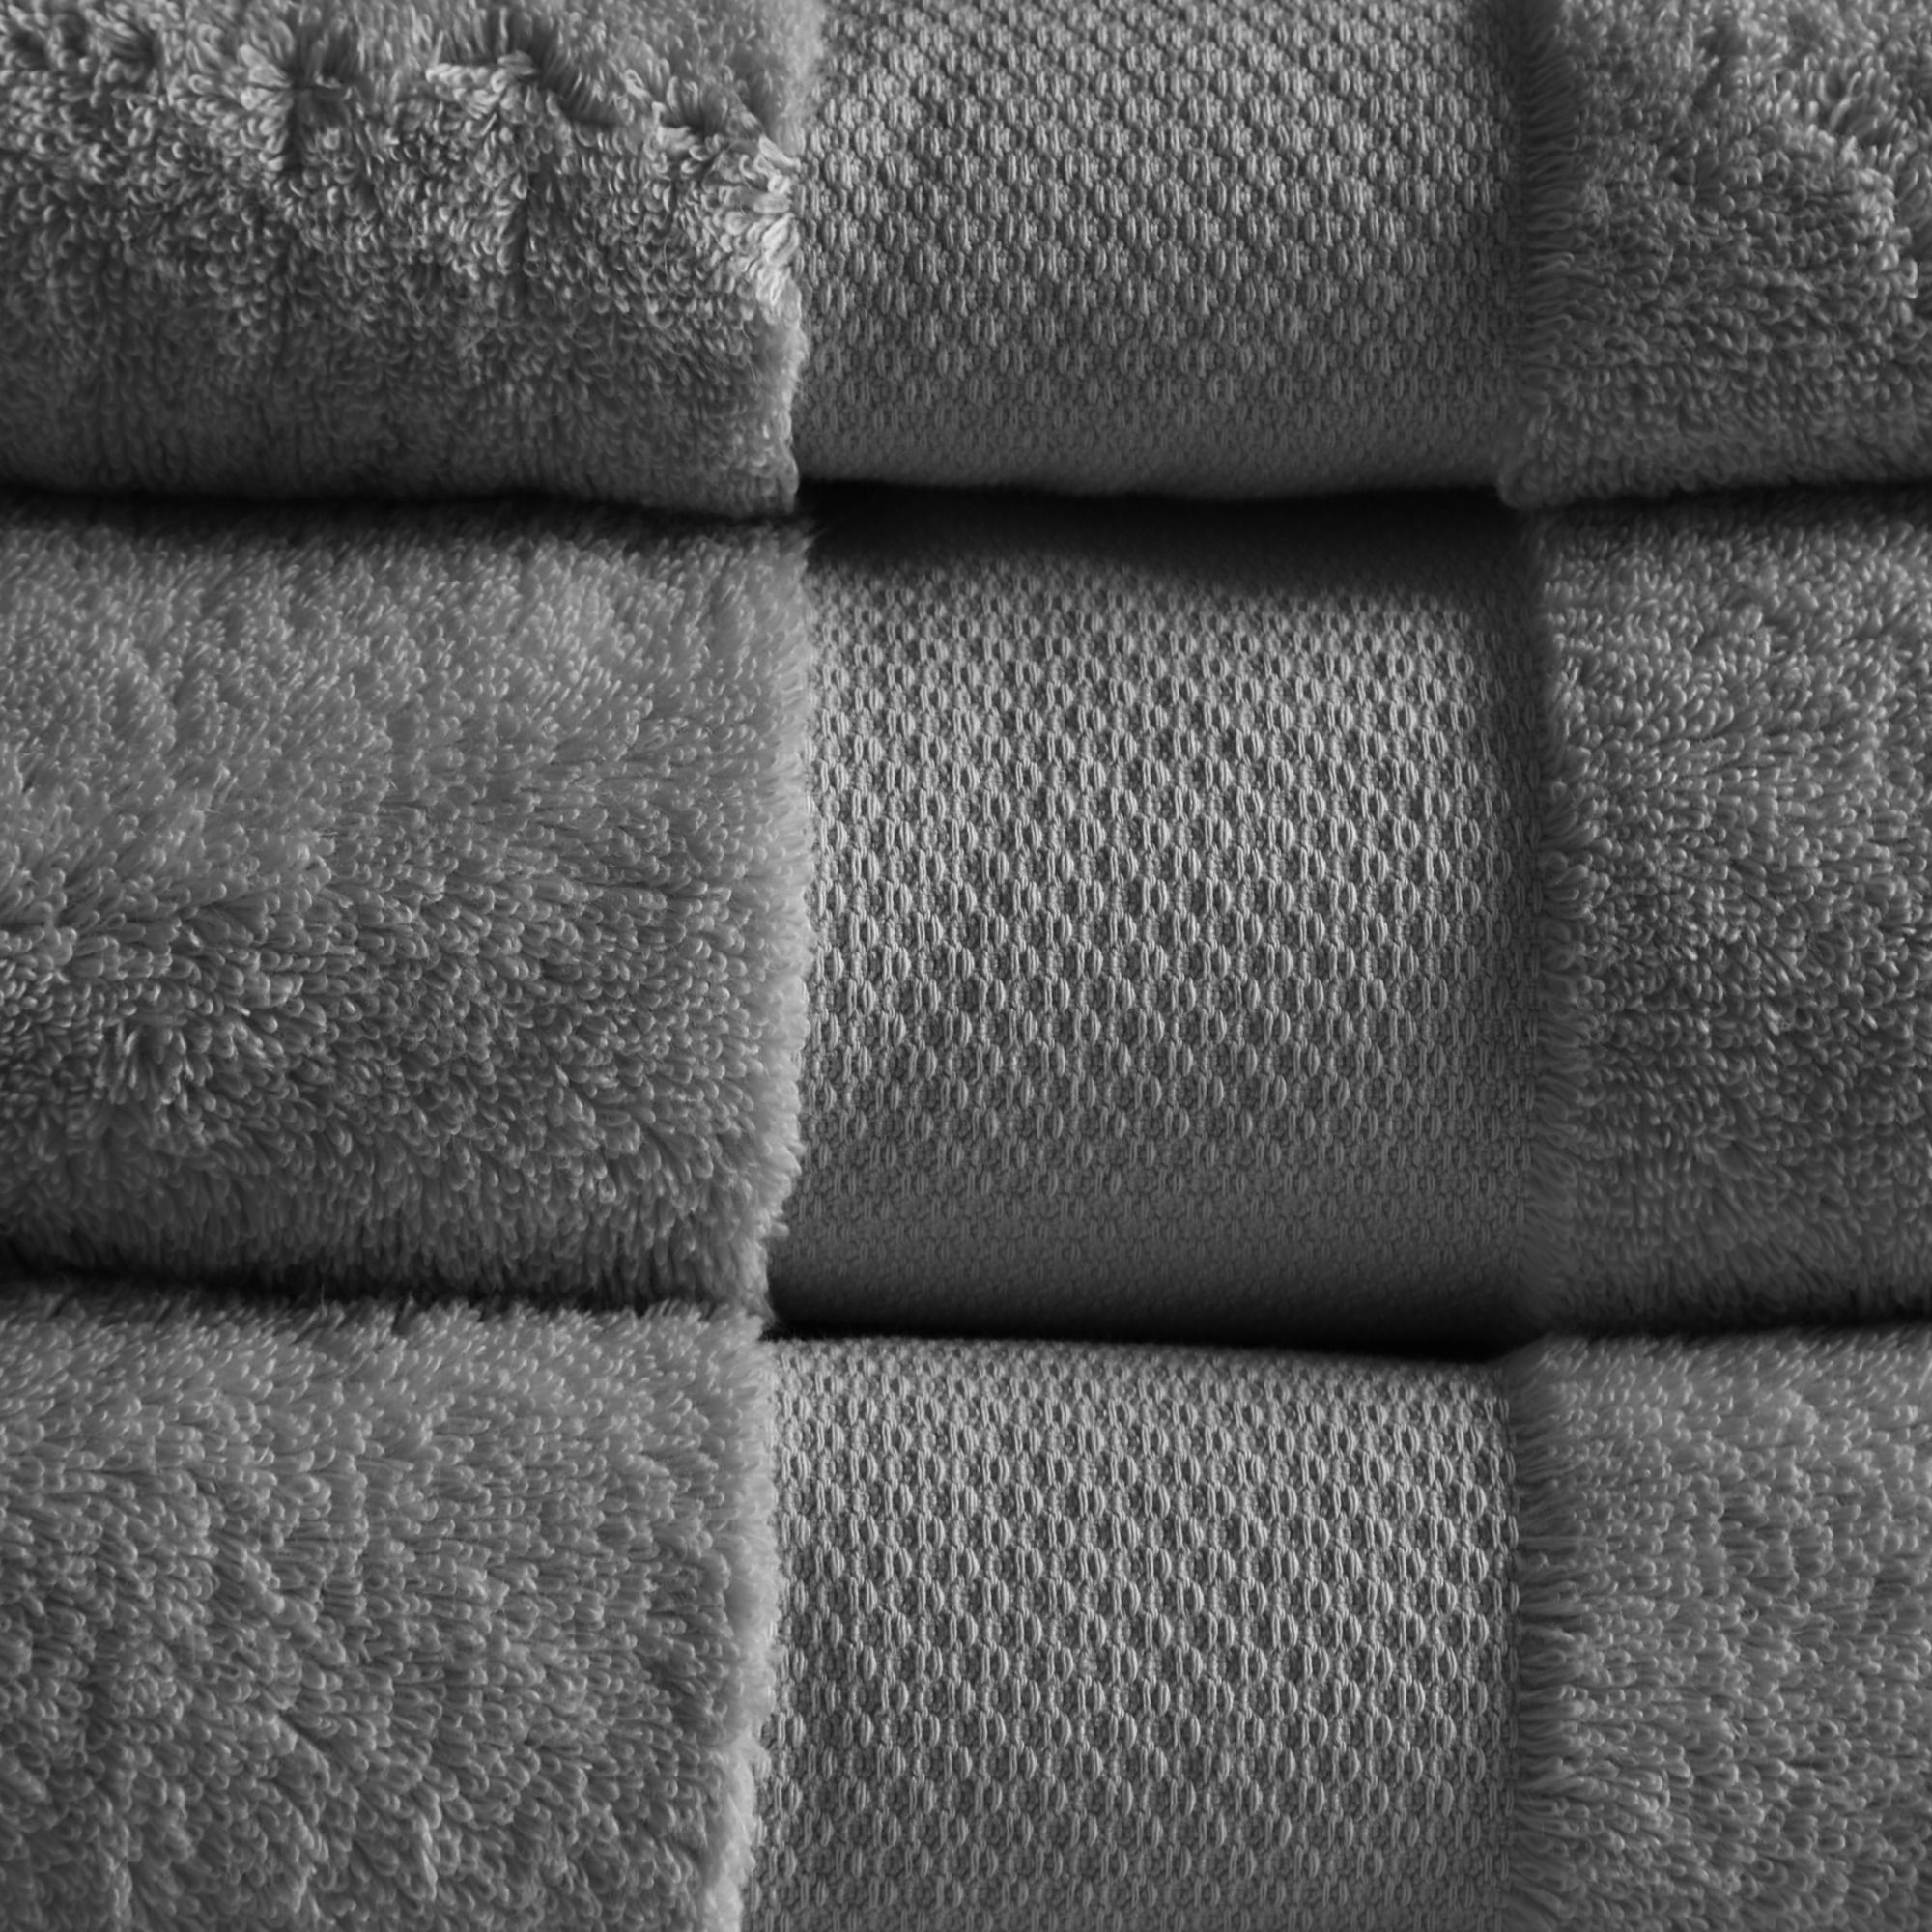 Madison Park Turkish 6 Piece Bath Towel Set, Cotton